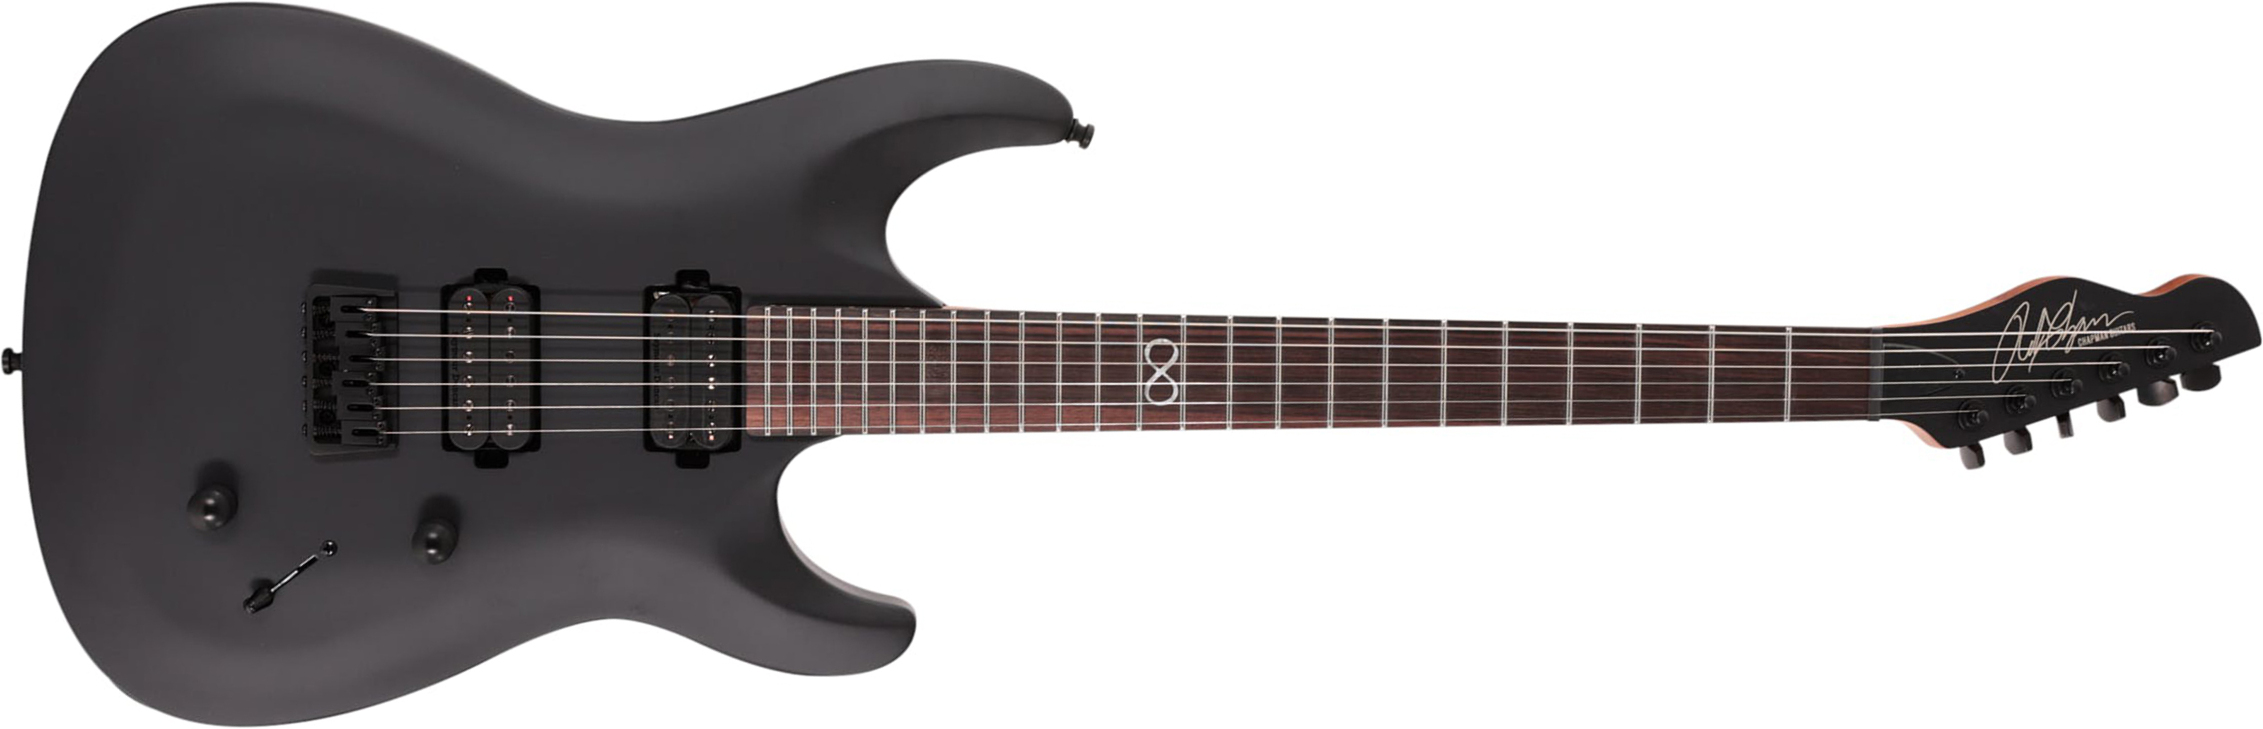 Chapman Guitars Ml1 Modern Pro 2h Seymour Duncan  Ht Eb - Cyber Black - Str shape electric guitar - Main picture